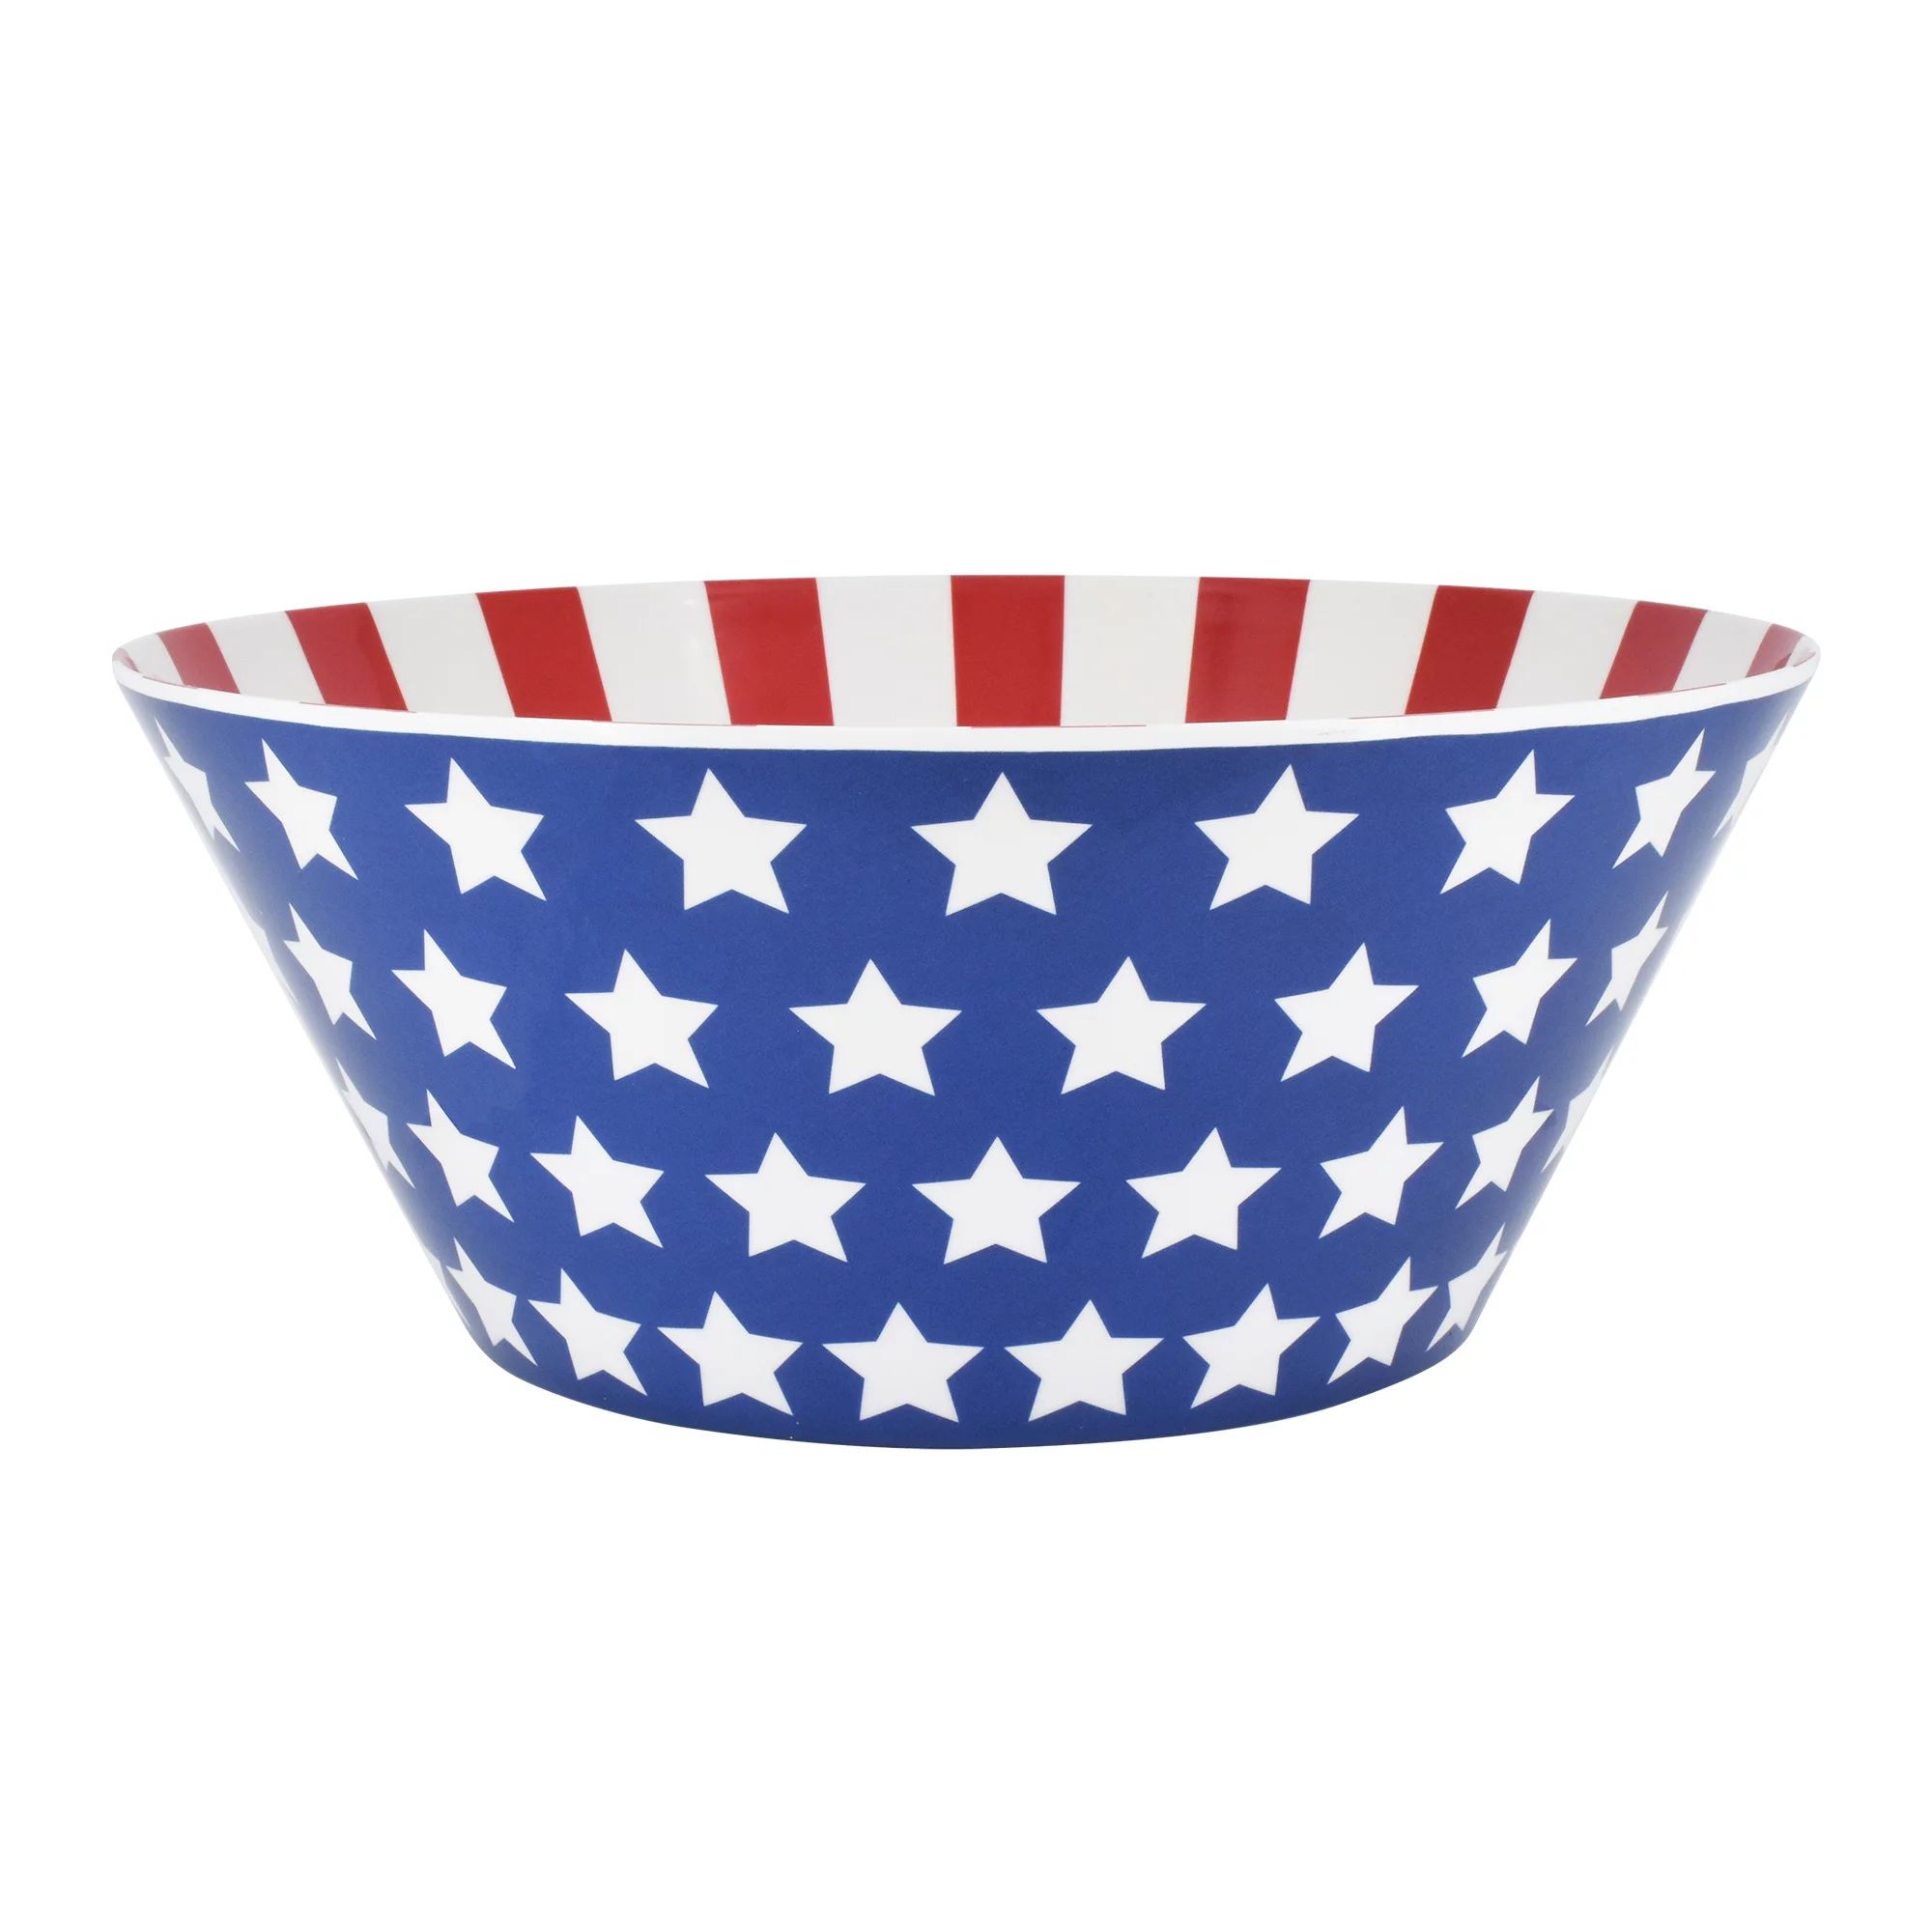 Patriotic Serving Bowl, 11.5 inch -Way to Celebrate | Walmart (US)